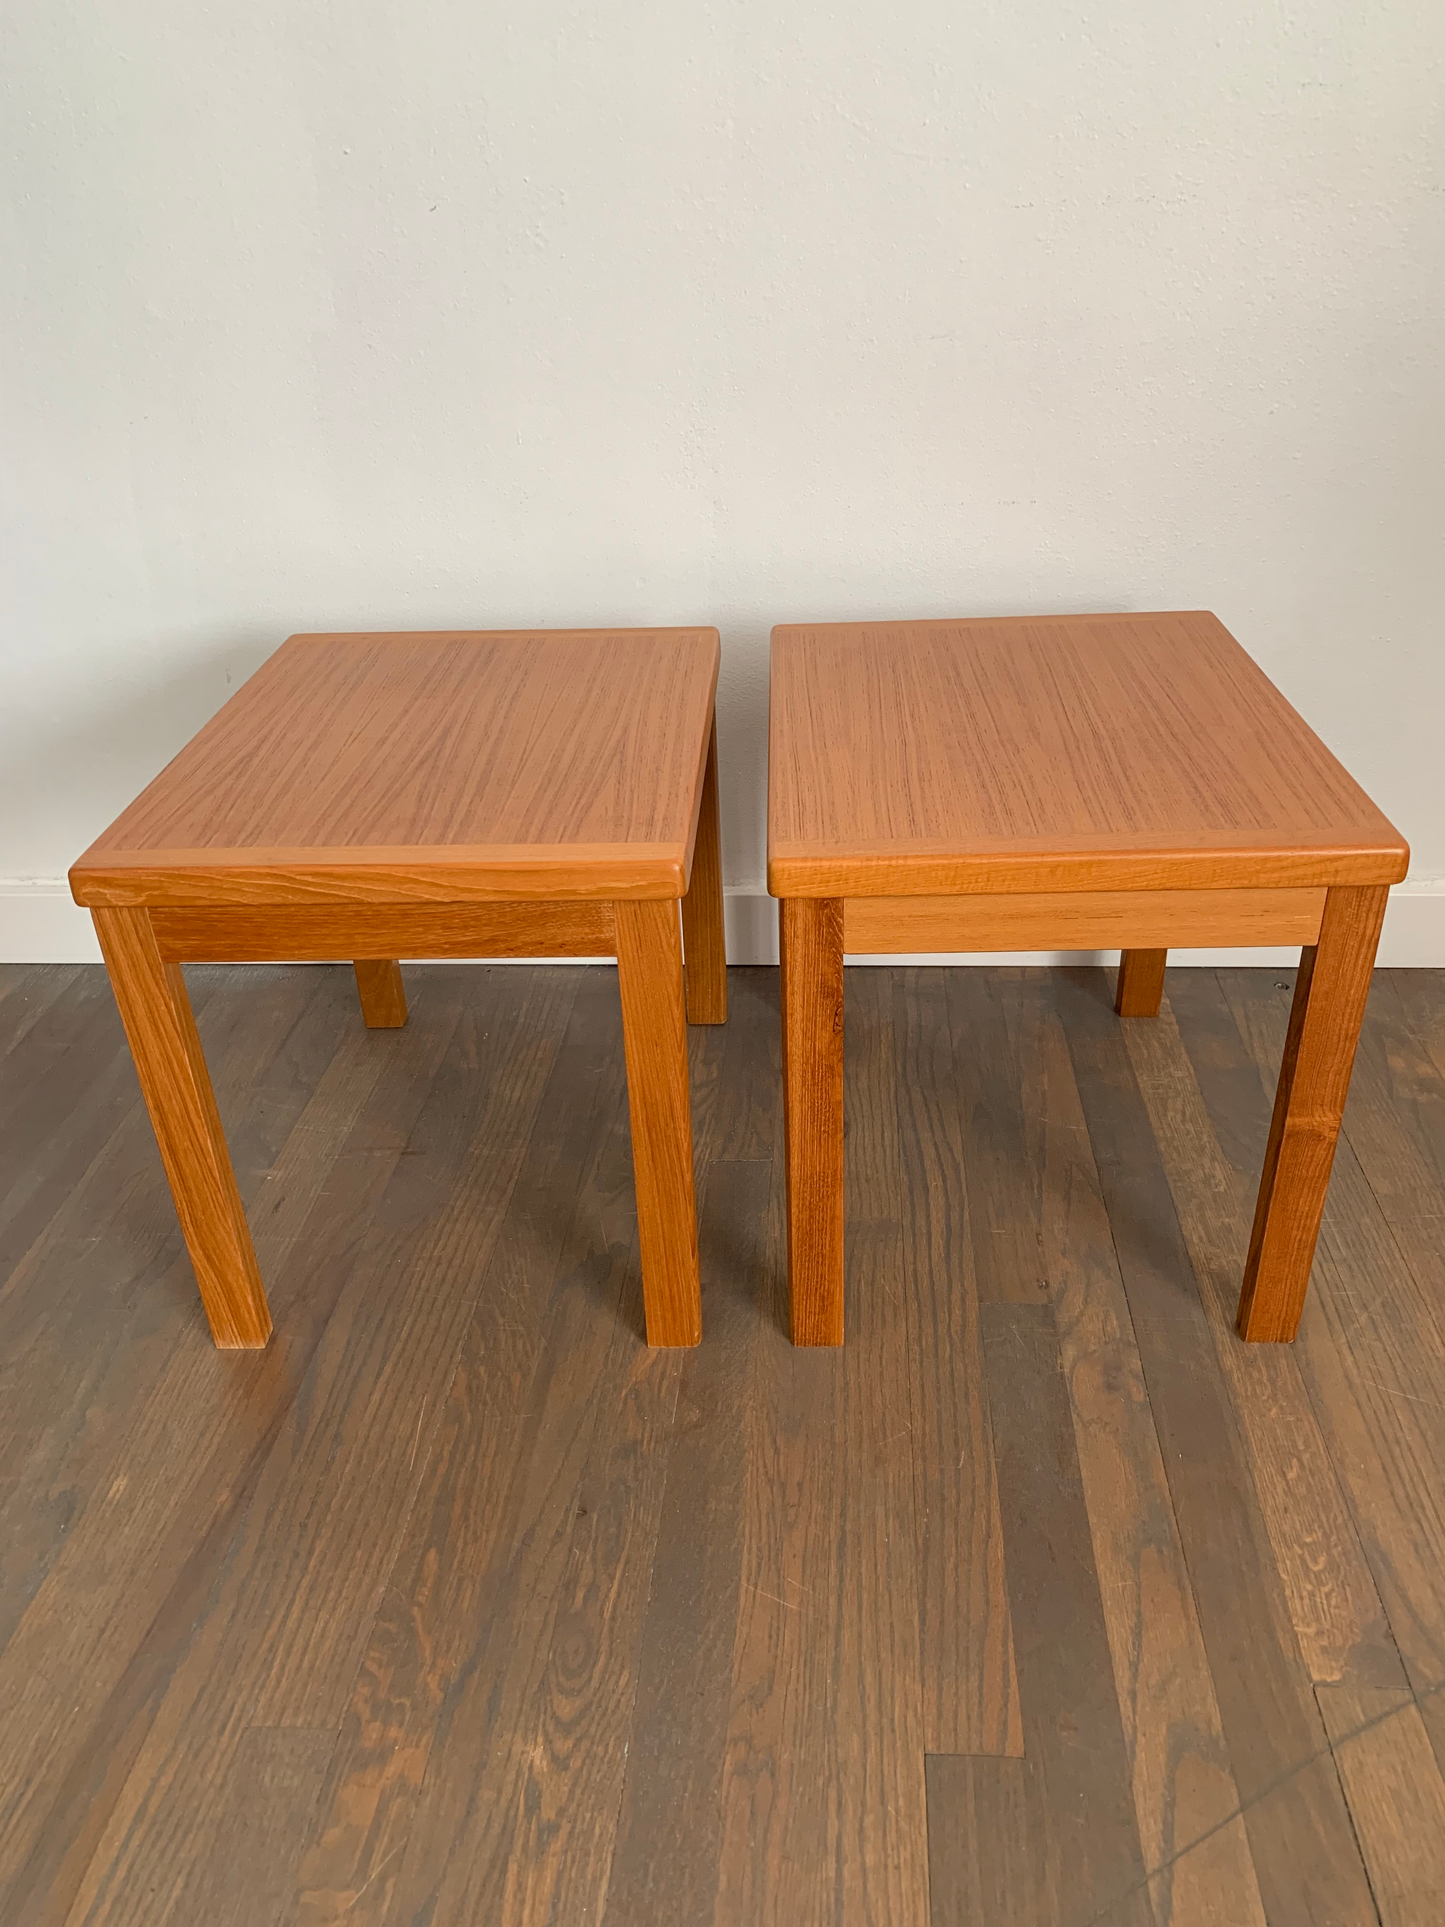 Late 20th Century Danish Modern Teak Side Tables - a Pair